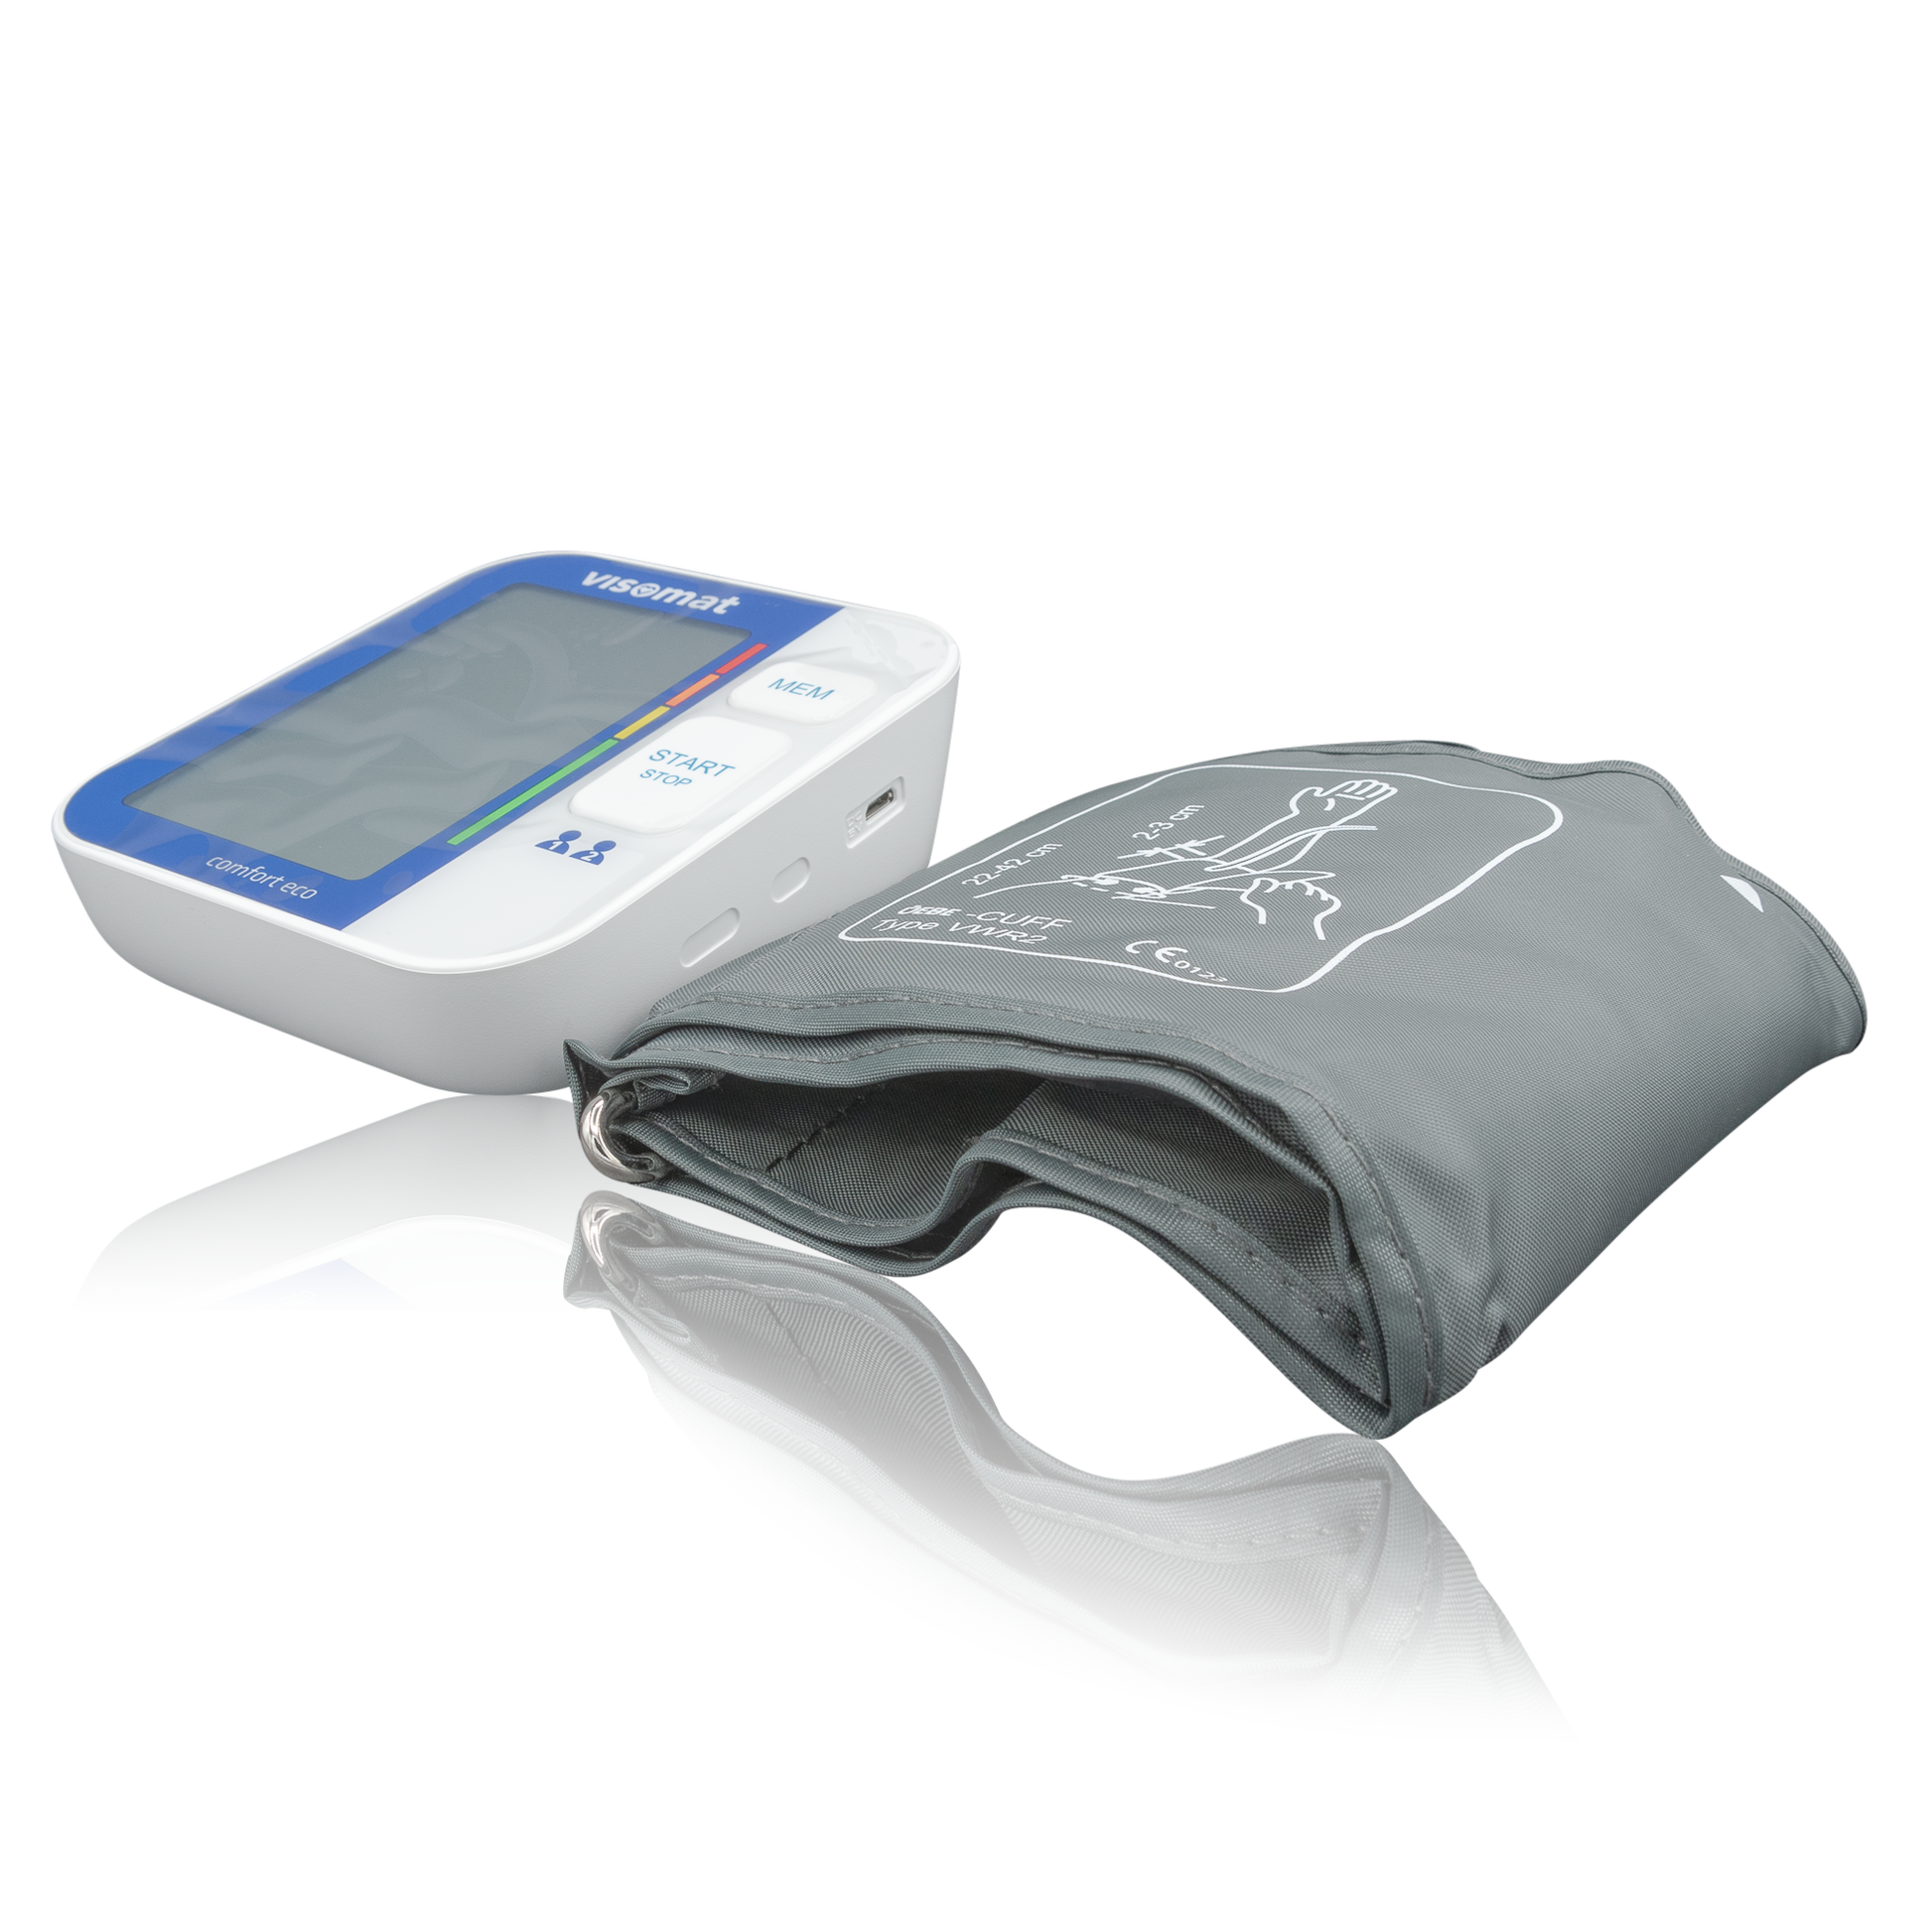 Visomat Comfort Eco Oberarm-Blutdruckmessgerät (1 St.) - PZN: 1147685 - RoTe Place